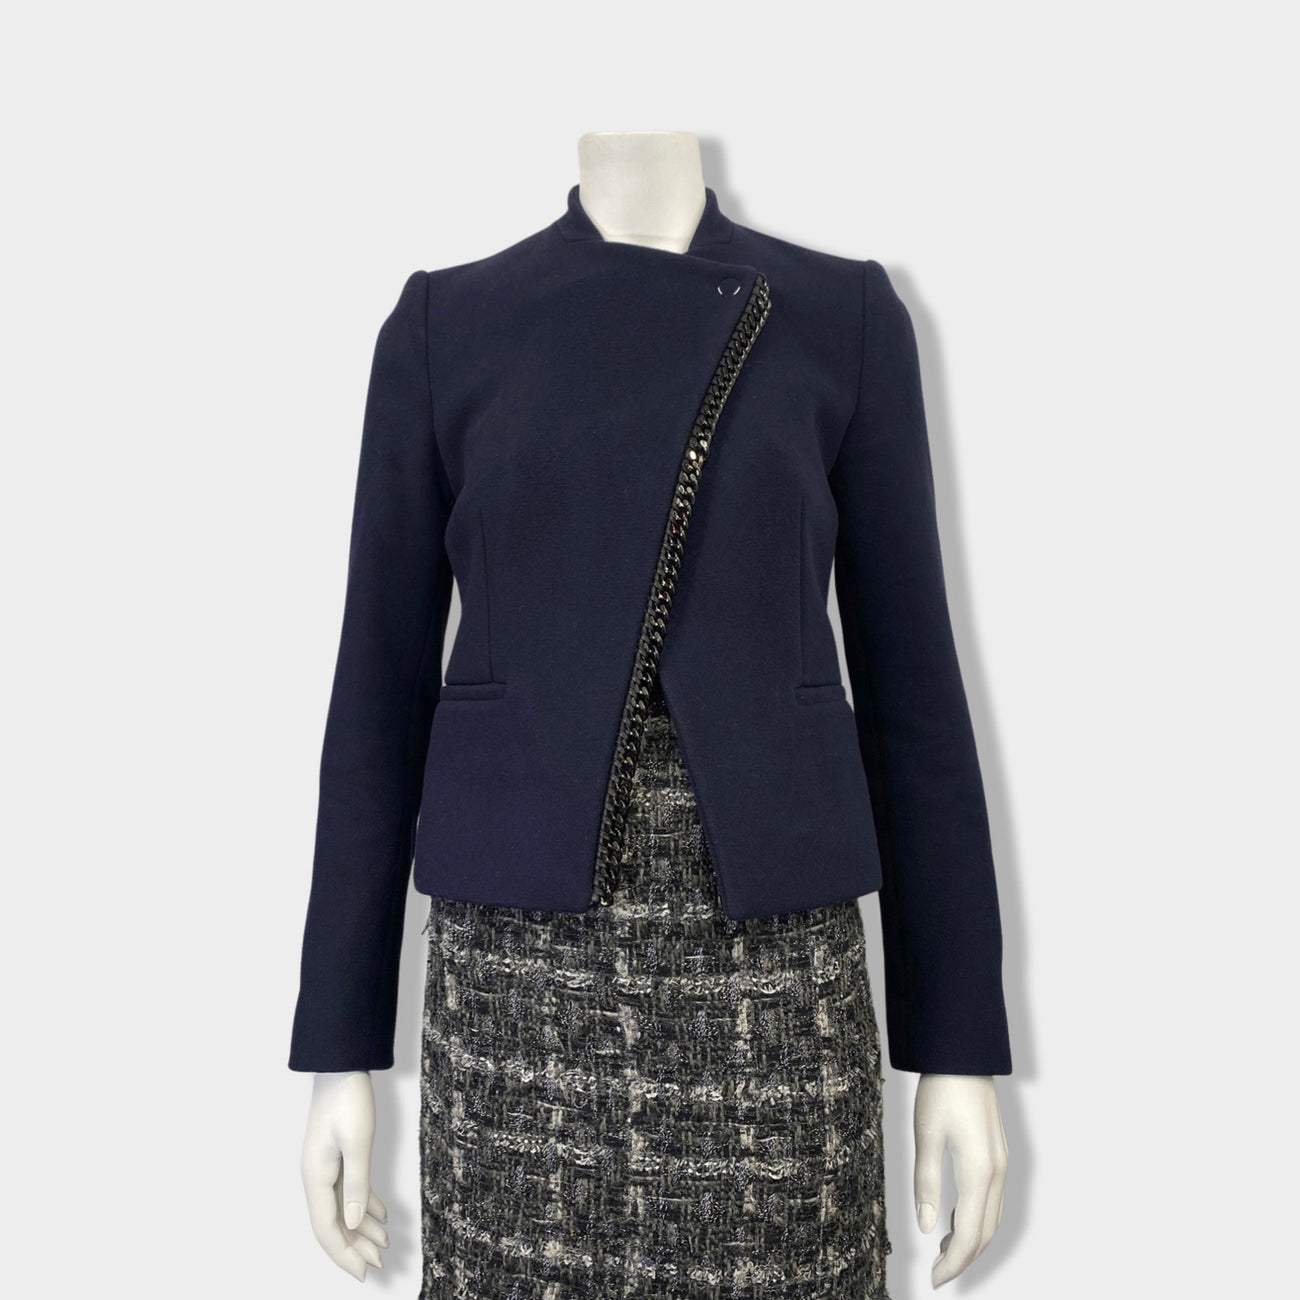 STELLA MCCARTNEY navy woolen jacket with chain detail – Loop